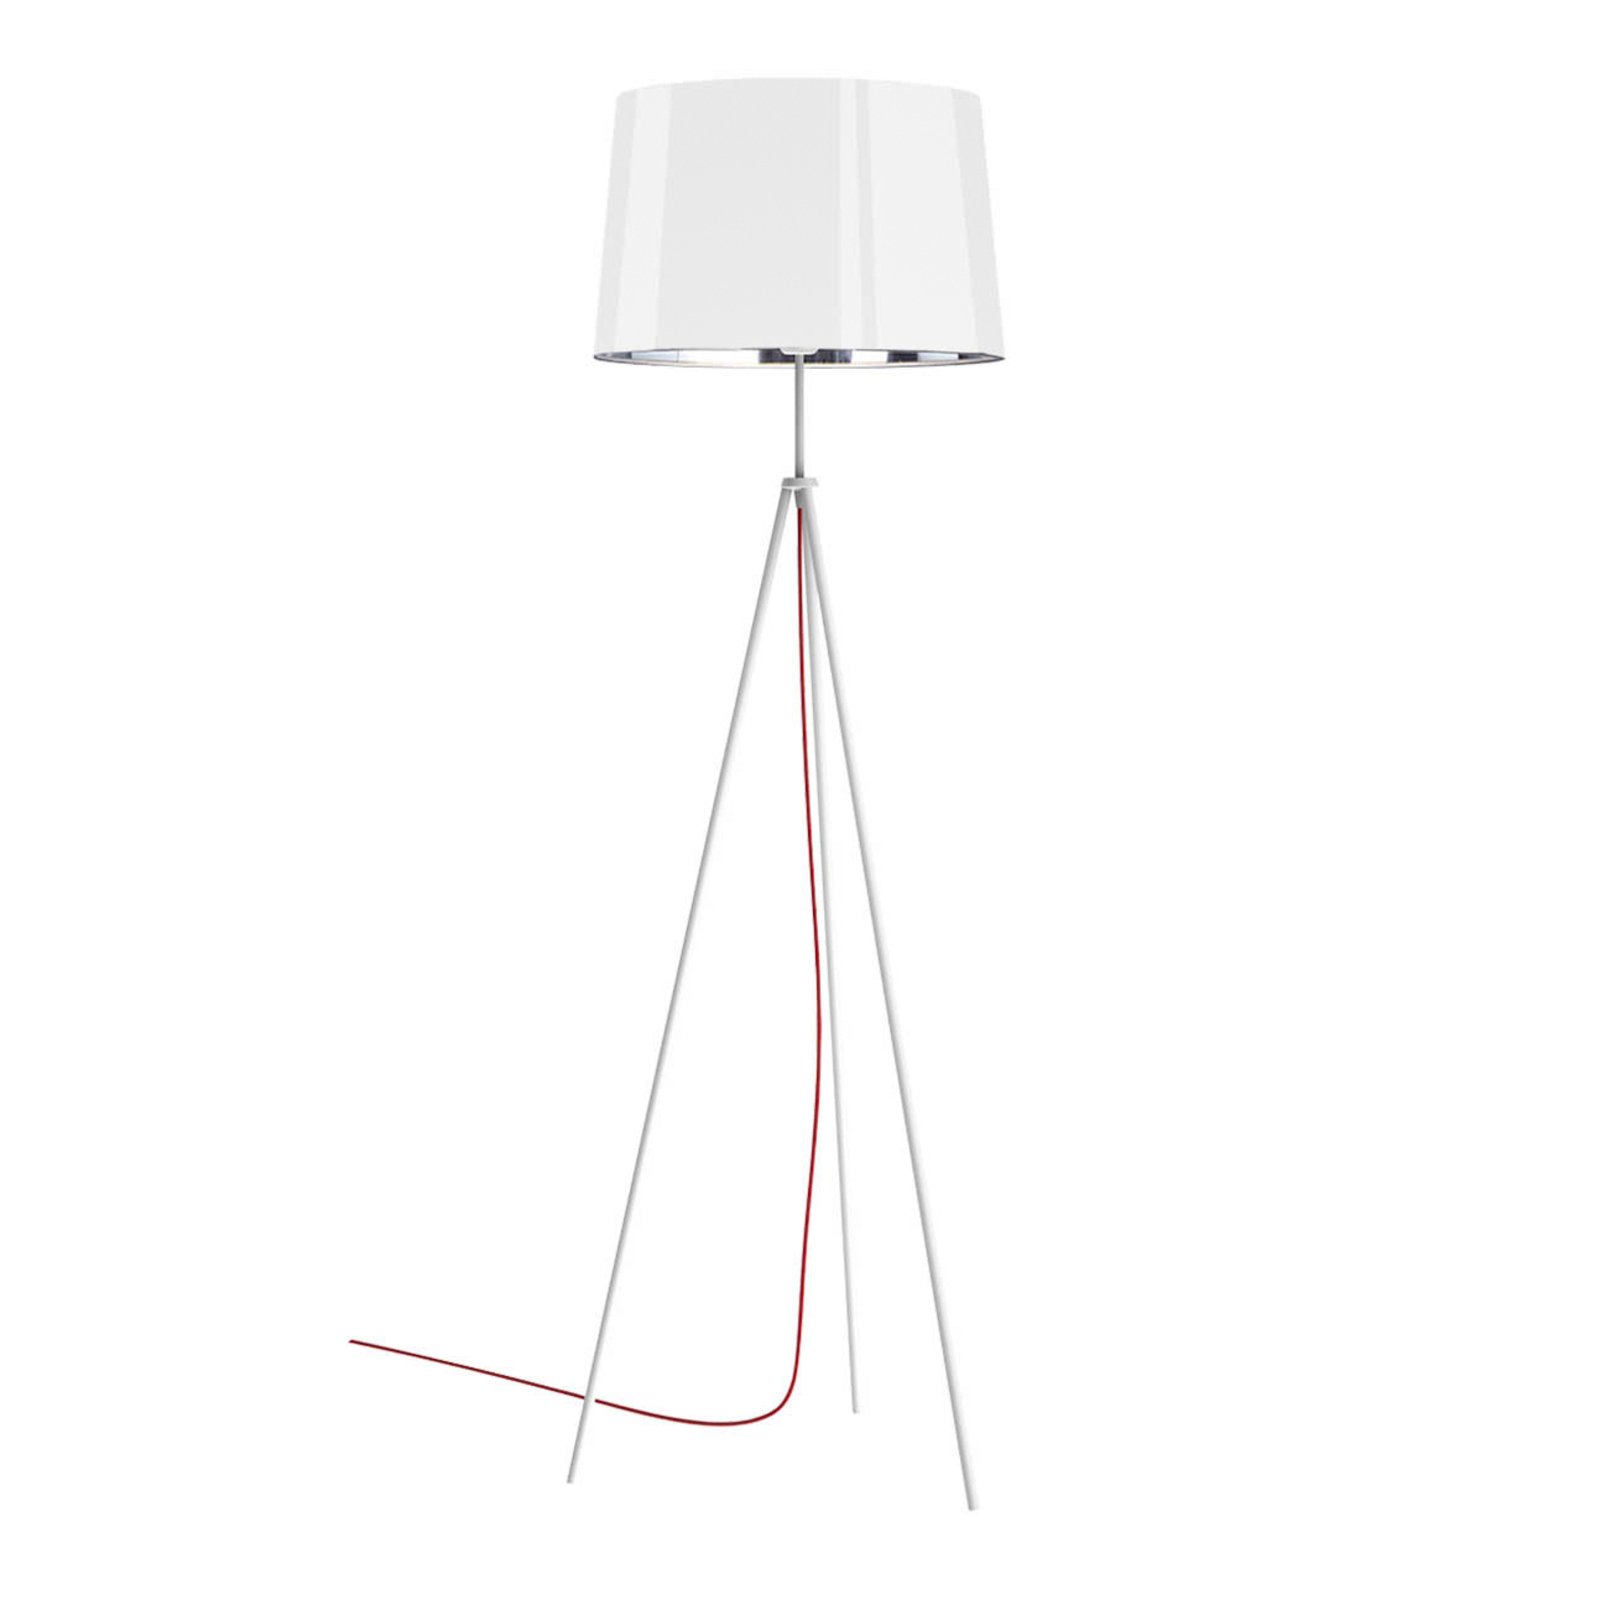 Aluminor Tropic lampadaire blanc, câble rouge